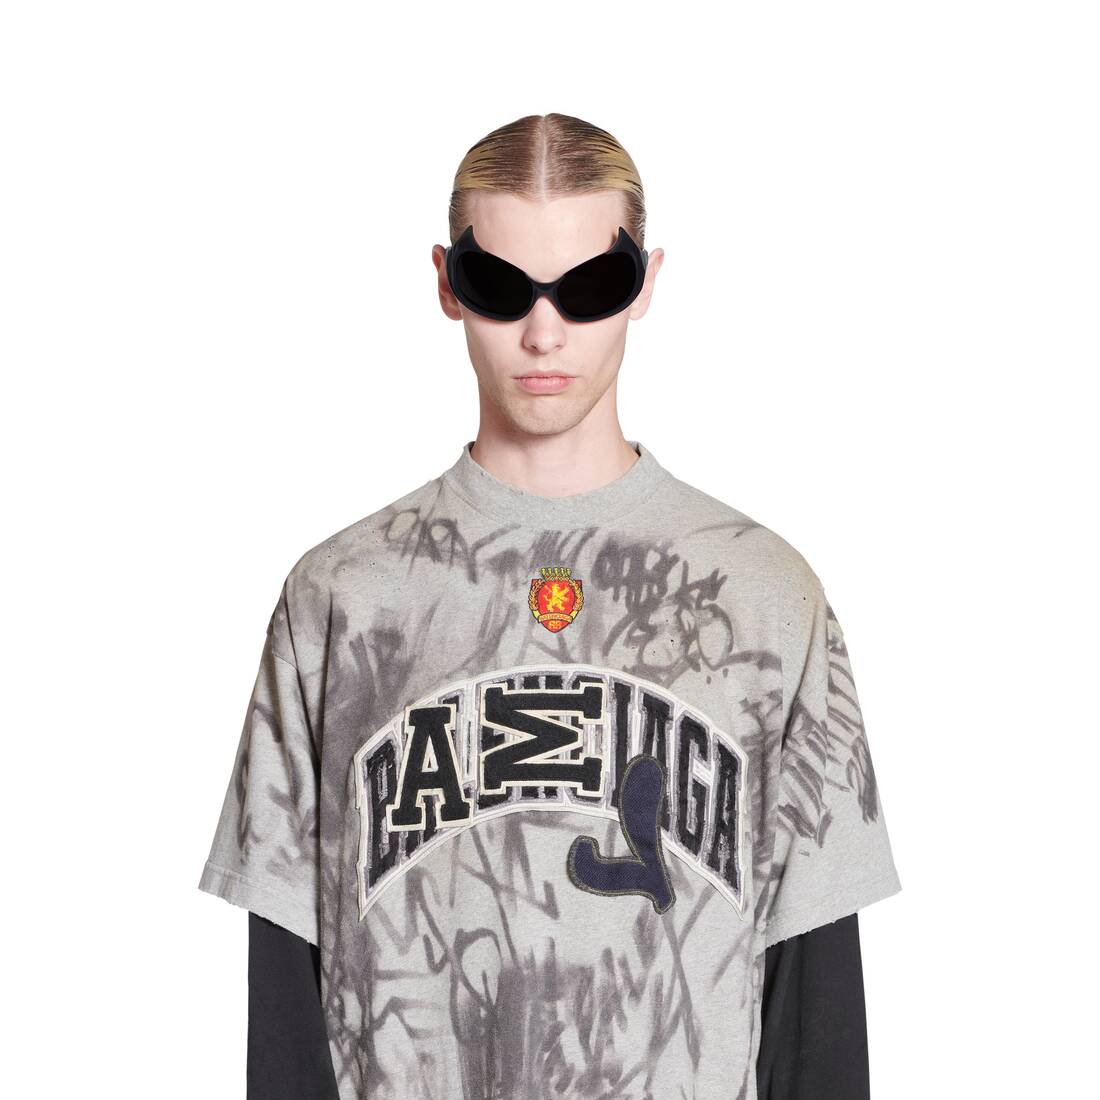 Balenciaga Skater T-Shirt Oversized - Black - Unisex - 2 - Cotton